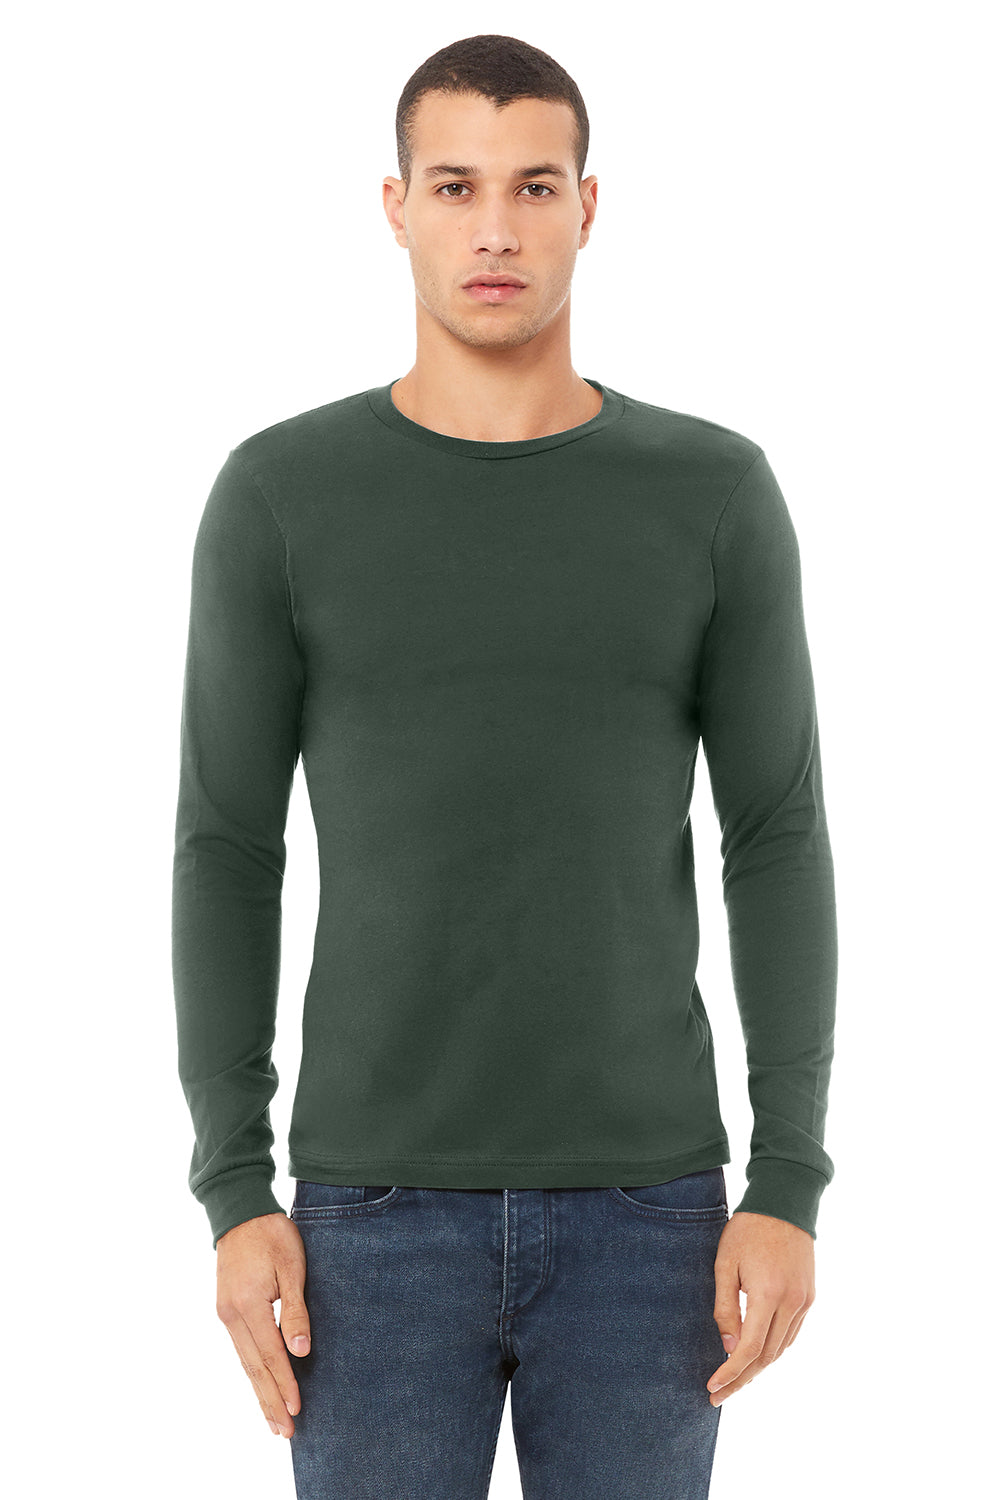 Bella + Canvas BC3501/3501 Mens Jersey Long Sleeve Crewneck T-Shirt Military Green Model Front